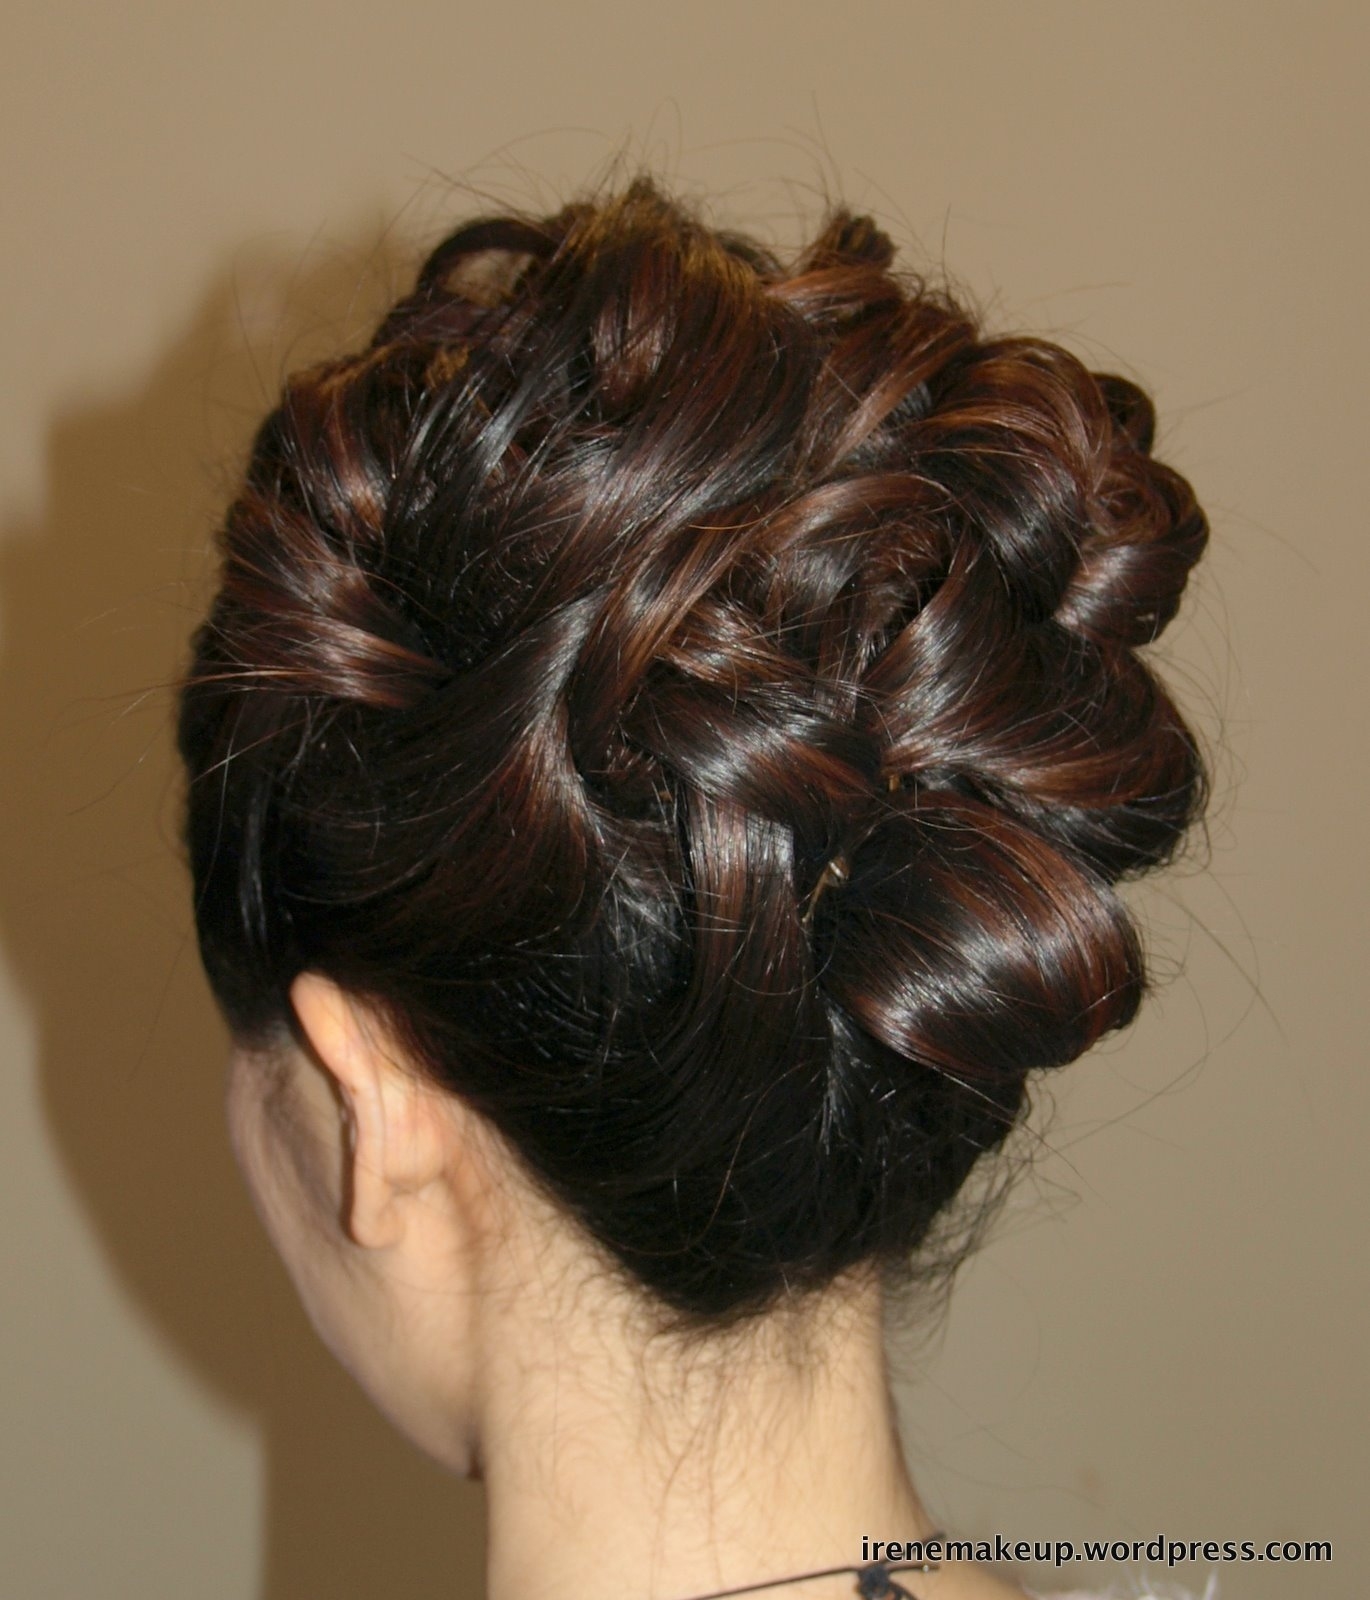 Chinese Bridal Hairstyles- Classic Sleek Updo 新娘盘头发型 | 伦敦 regarding Very best Asian Wedding Hairstyles For Long Hair